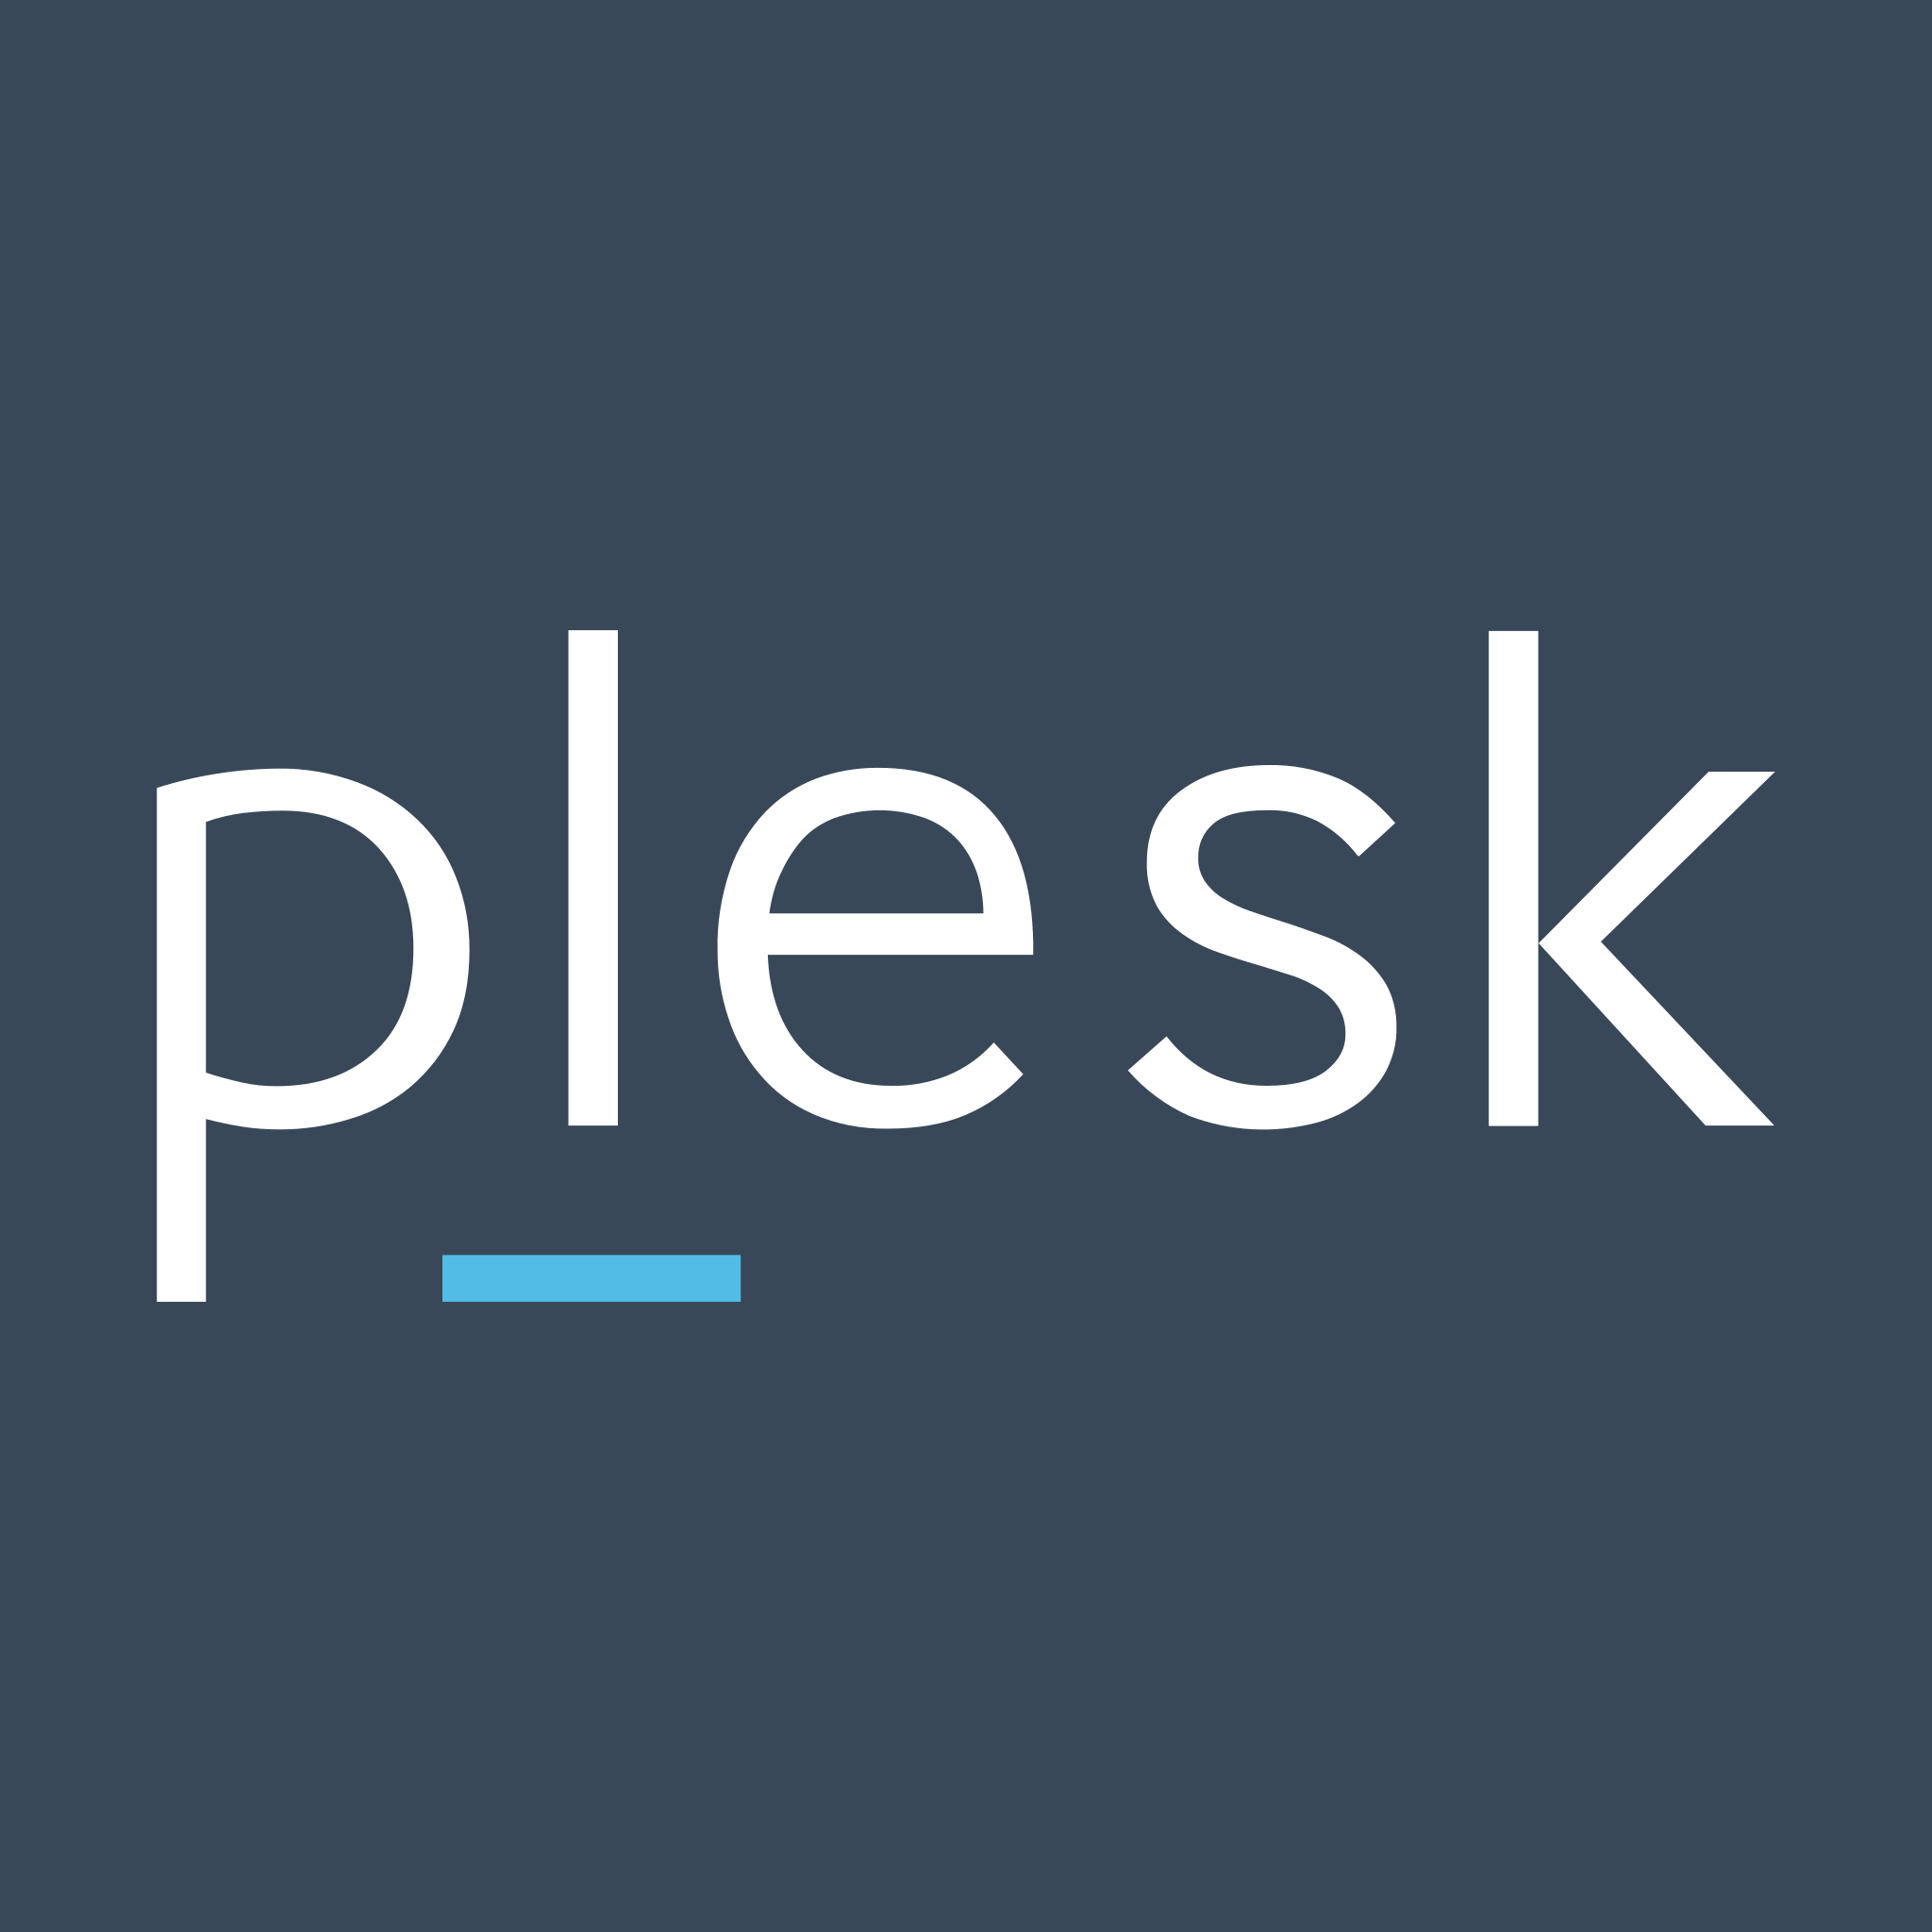 Servidor físico Plesk